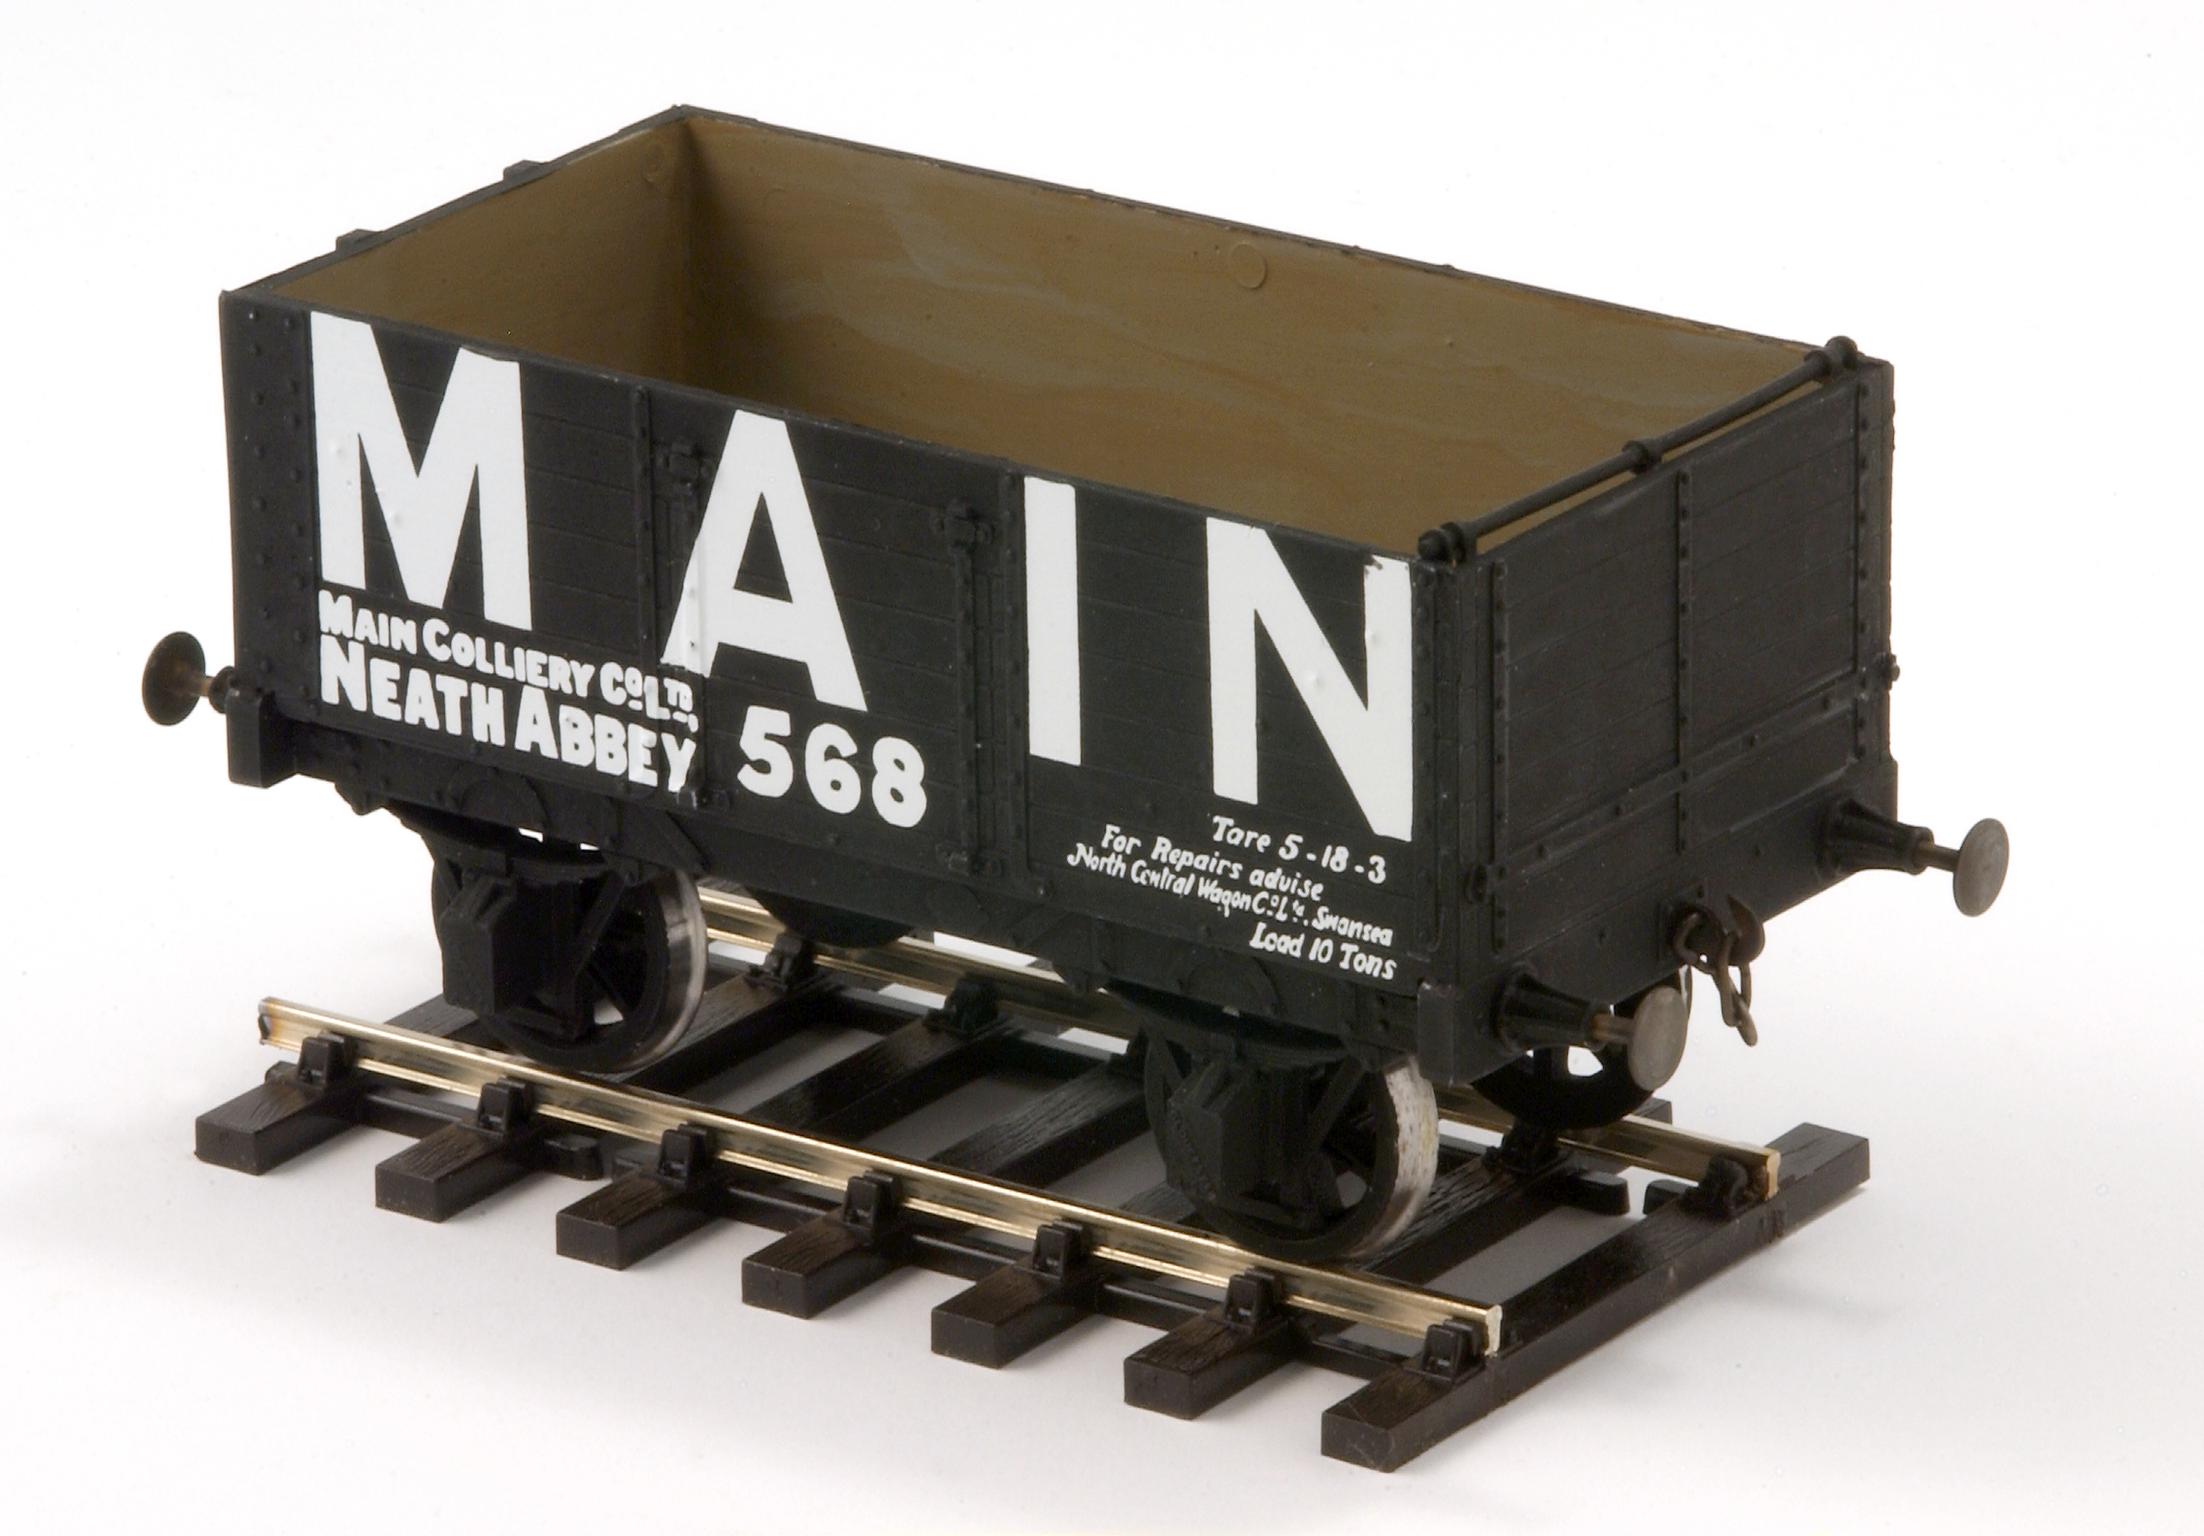 Main Colliery Co. Ltd, Neath, coal wagon model